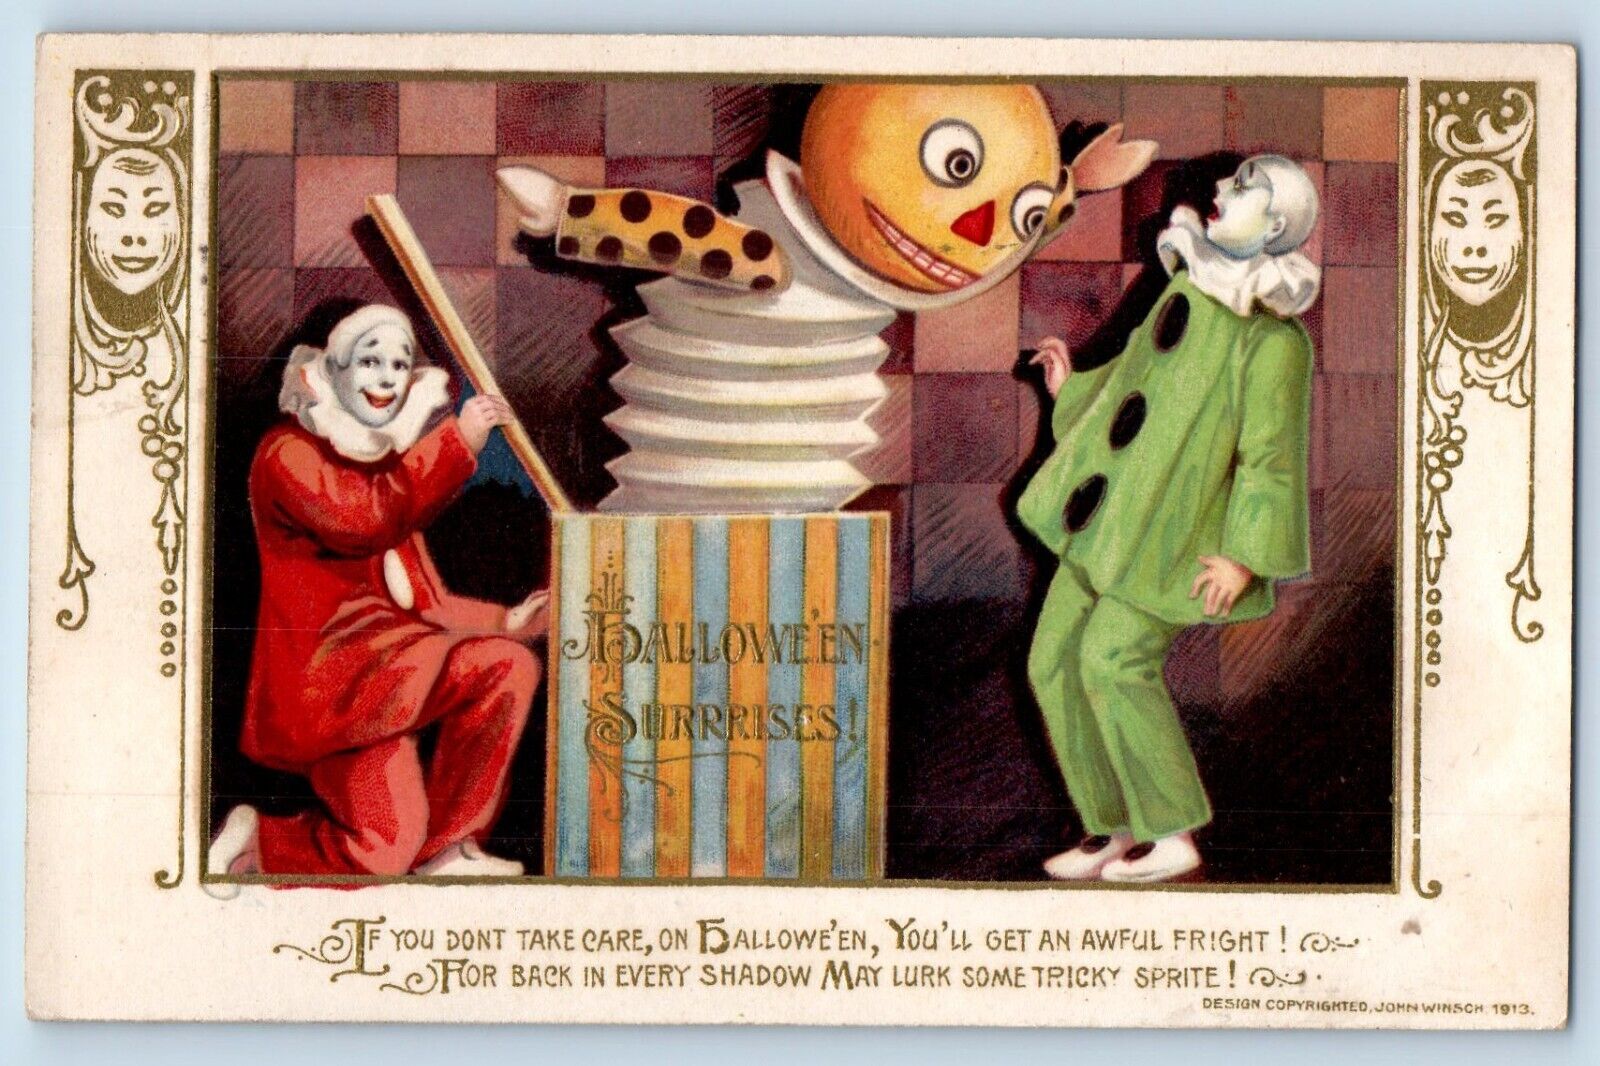 John Winsch Signed Postcard Halloween Surprises Jester Clown Toronto Ontario